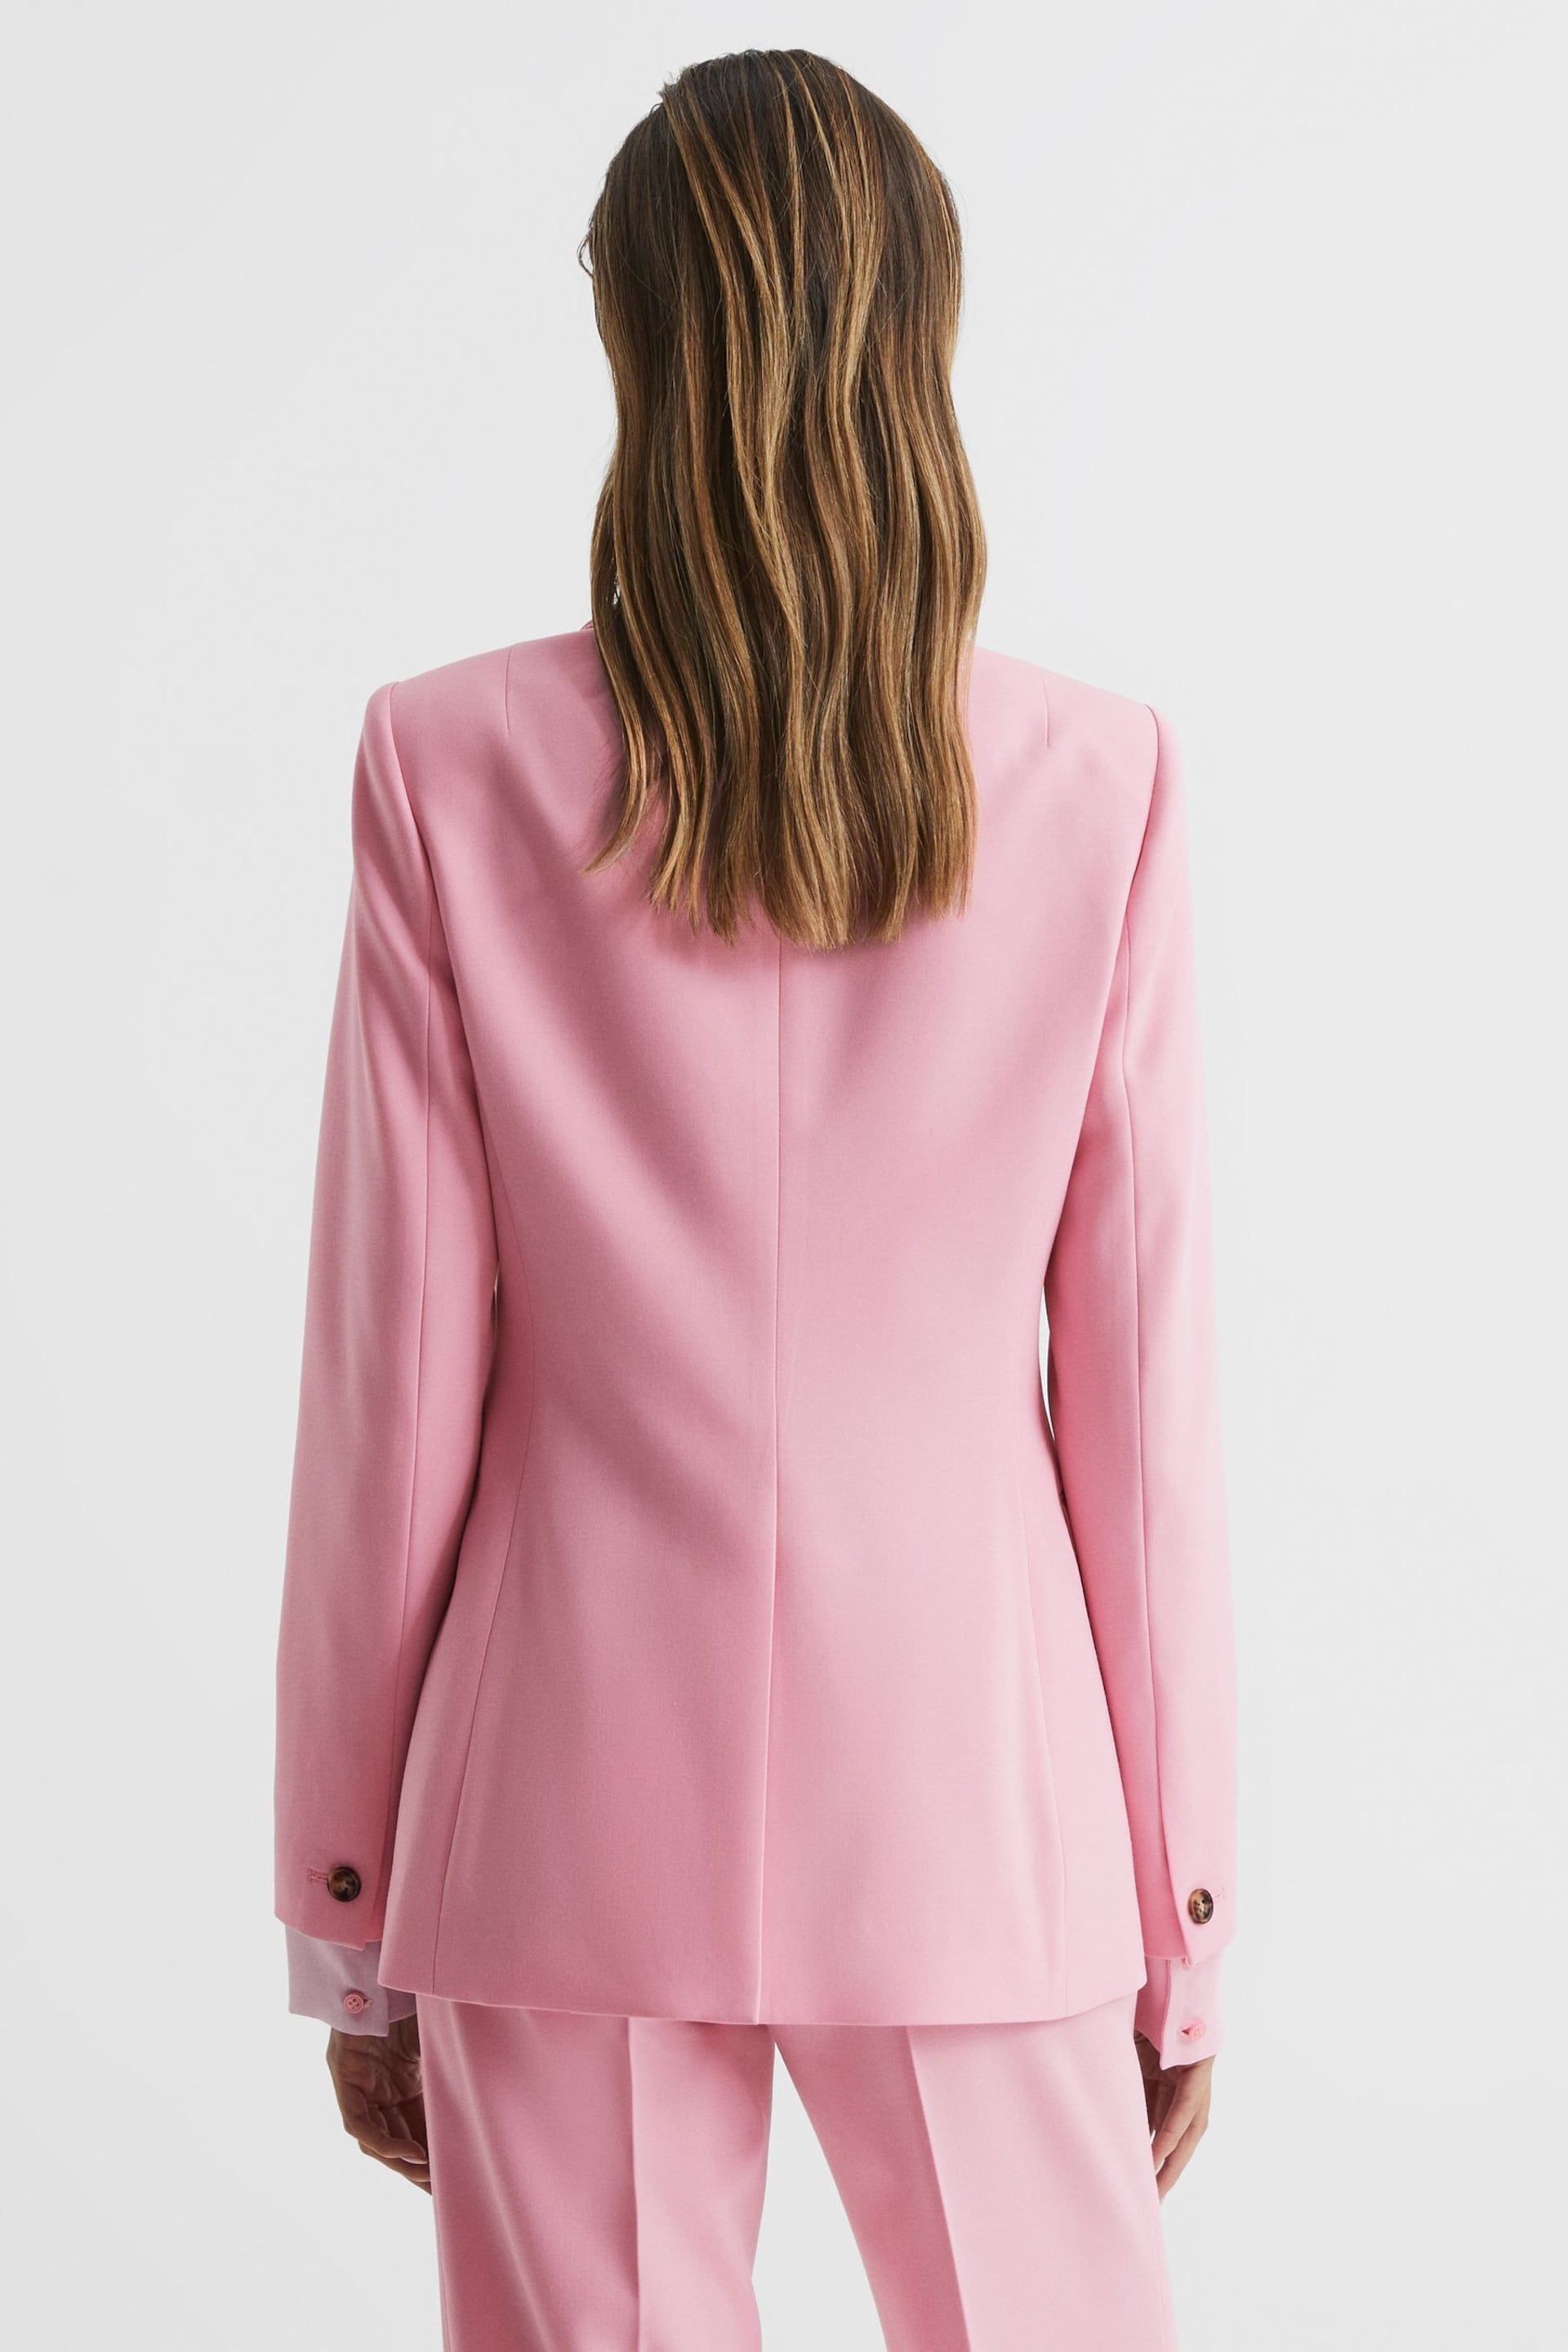 Reiss Pink Blair Single Breasted Wool Blend Blazer - Image 4 of 7